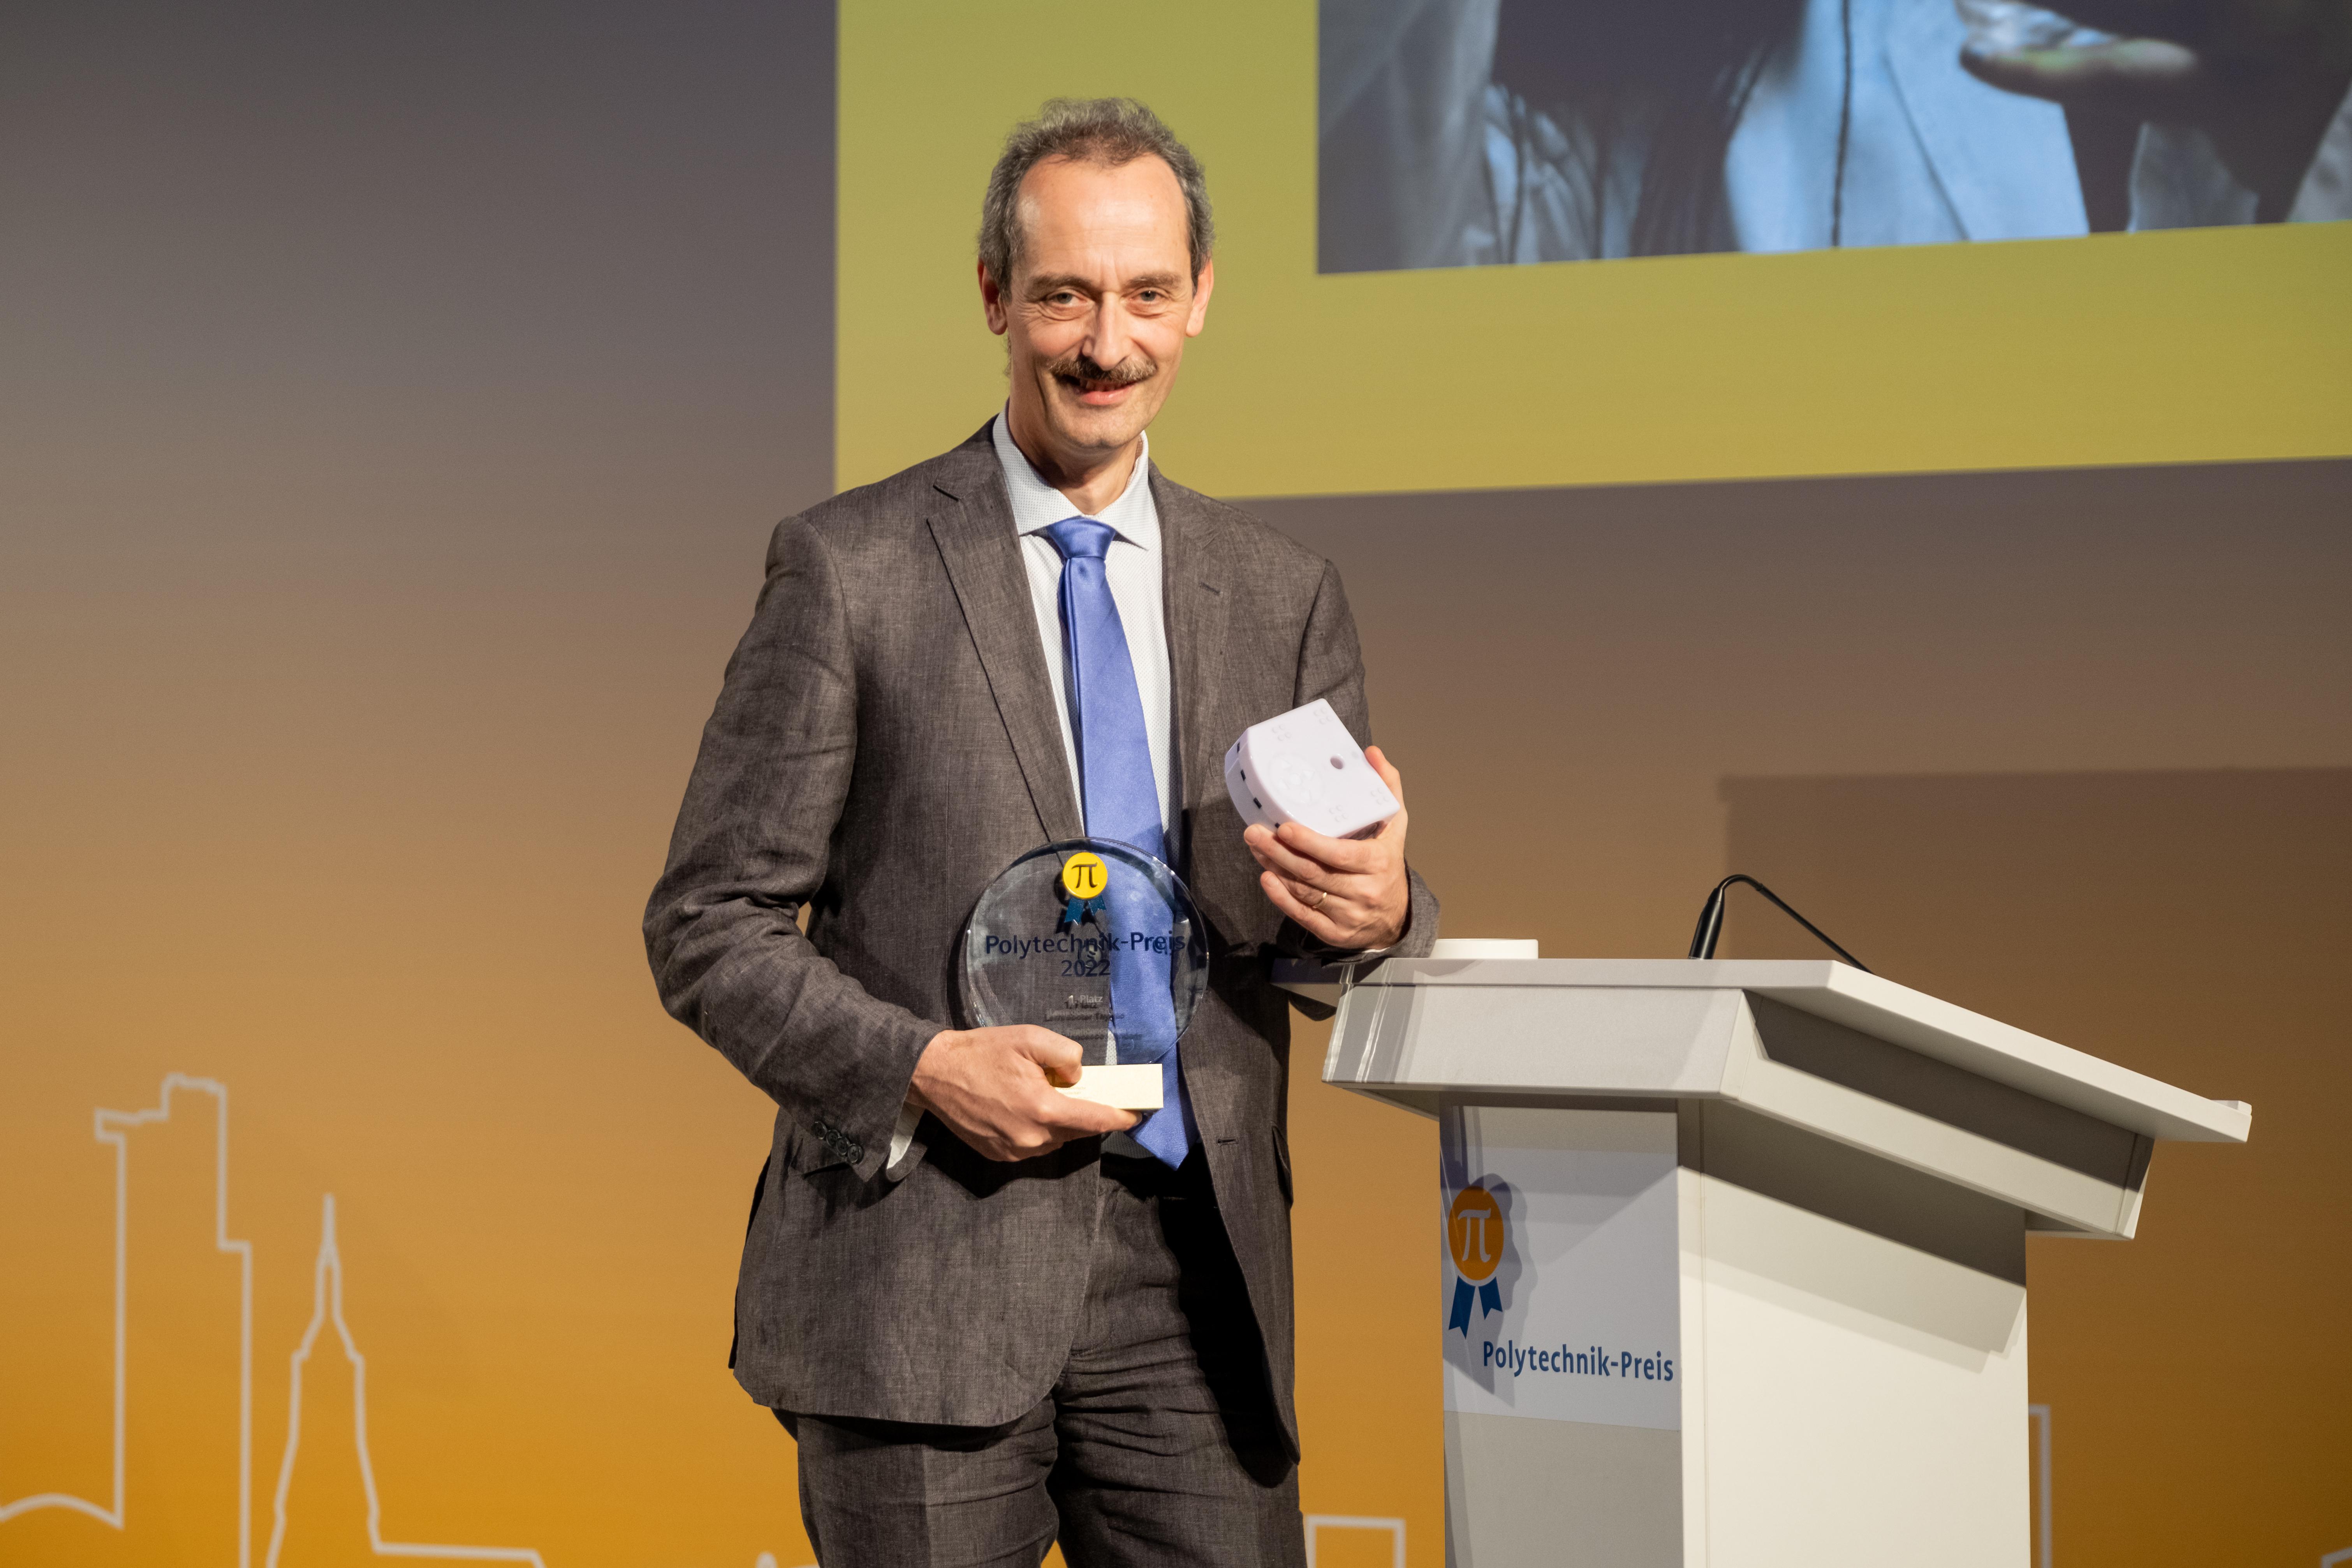 Francesco Mondada reçoit le Polytechnik-Preis 2022